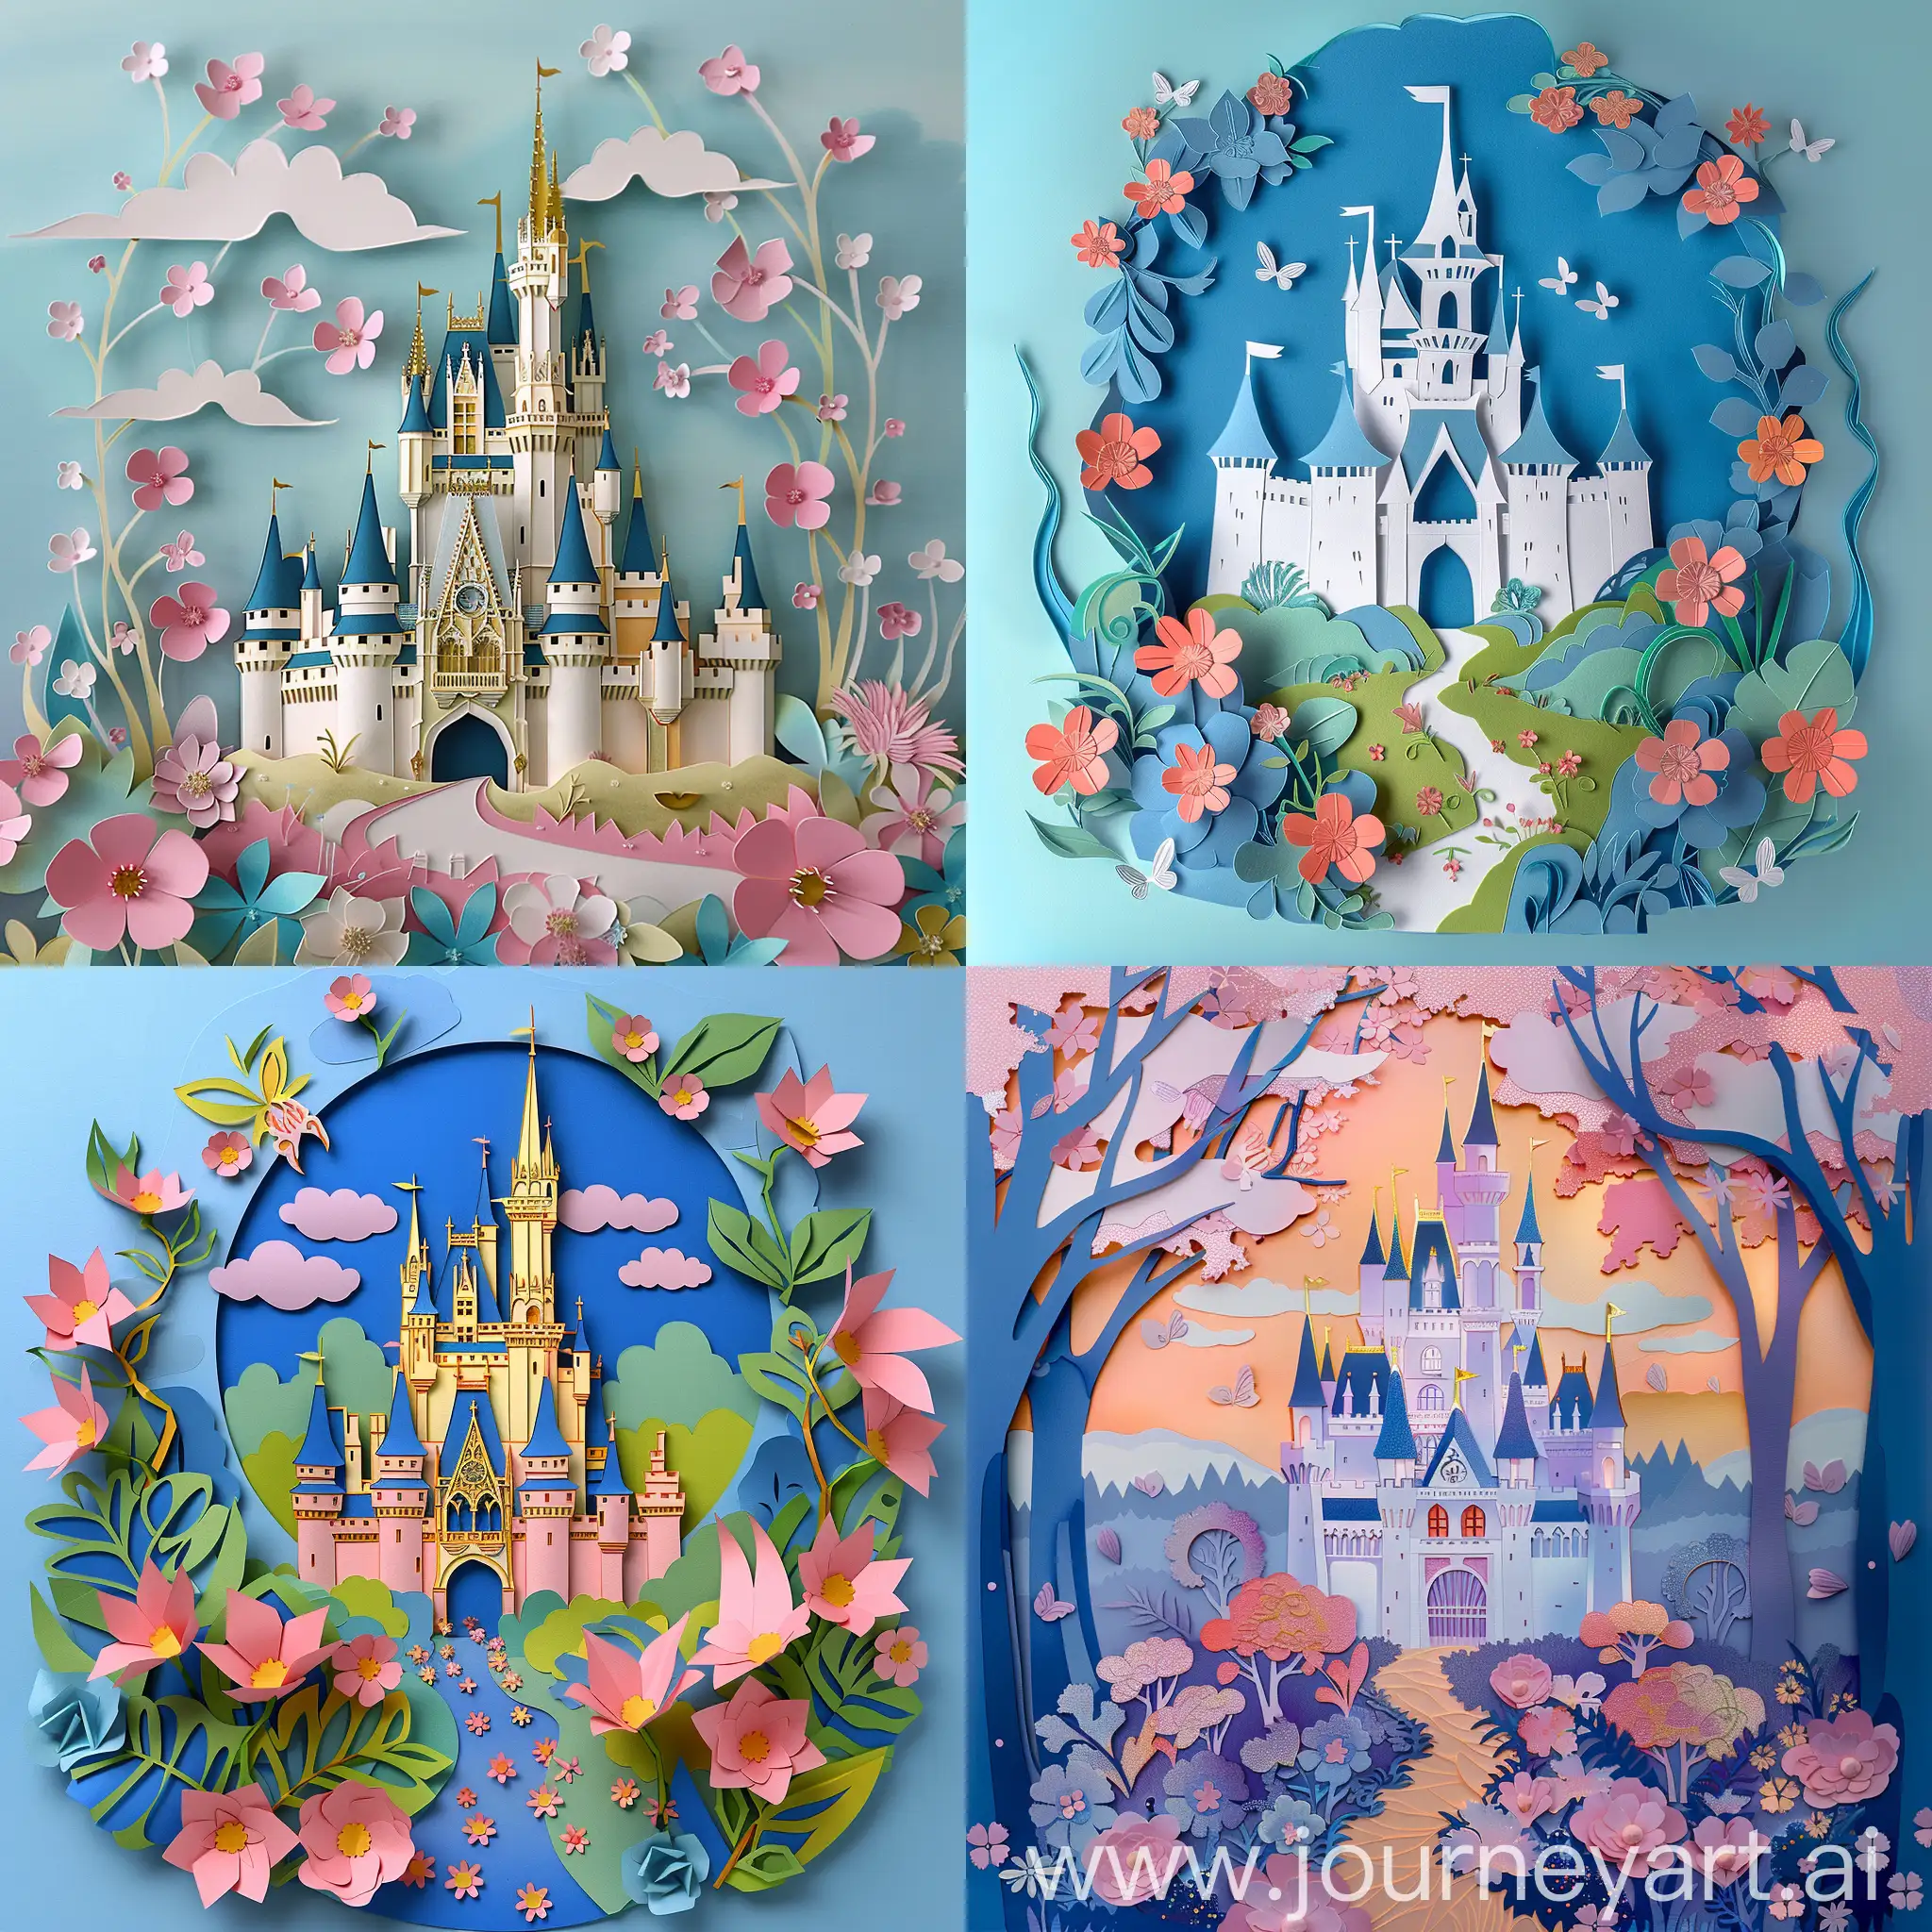 Create papercut landscape capturing fairytale castle, surrounding blooming floors